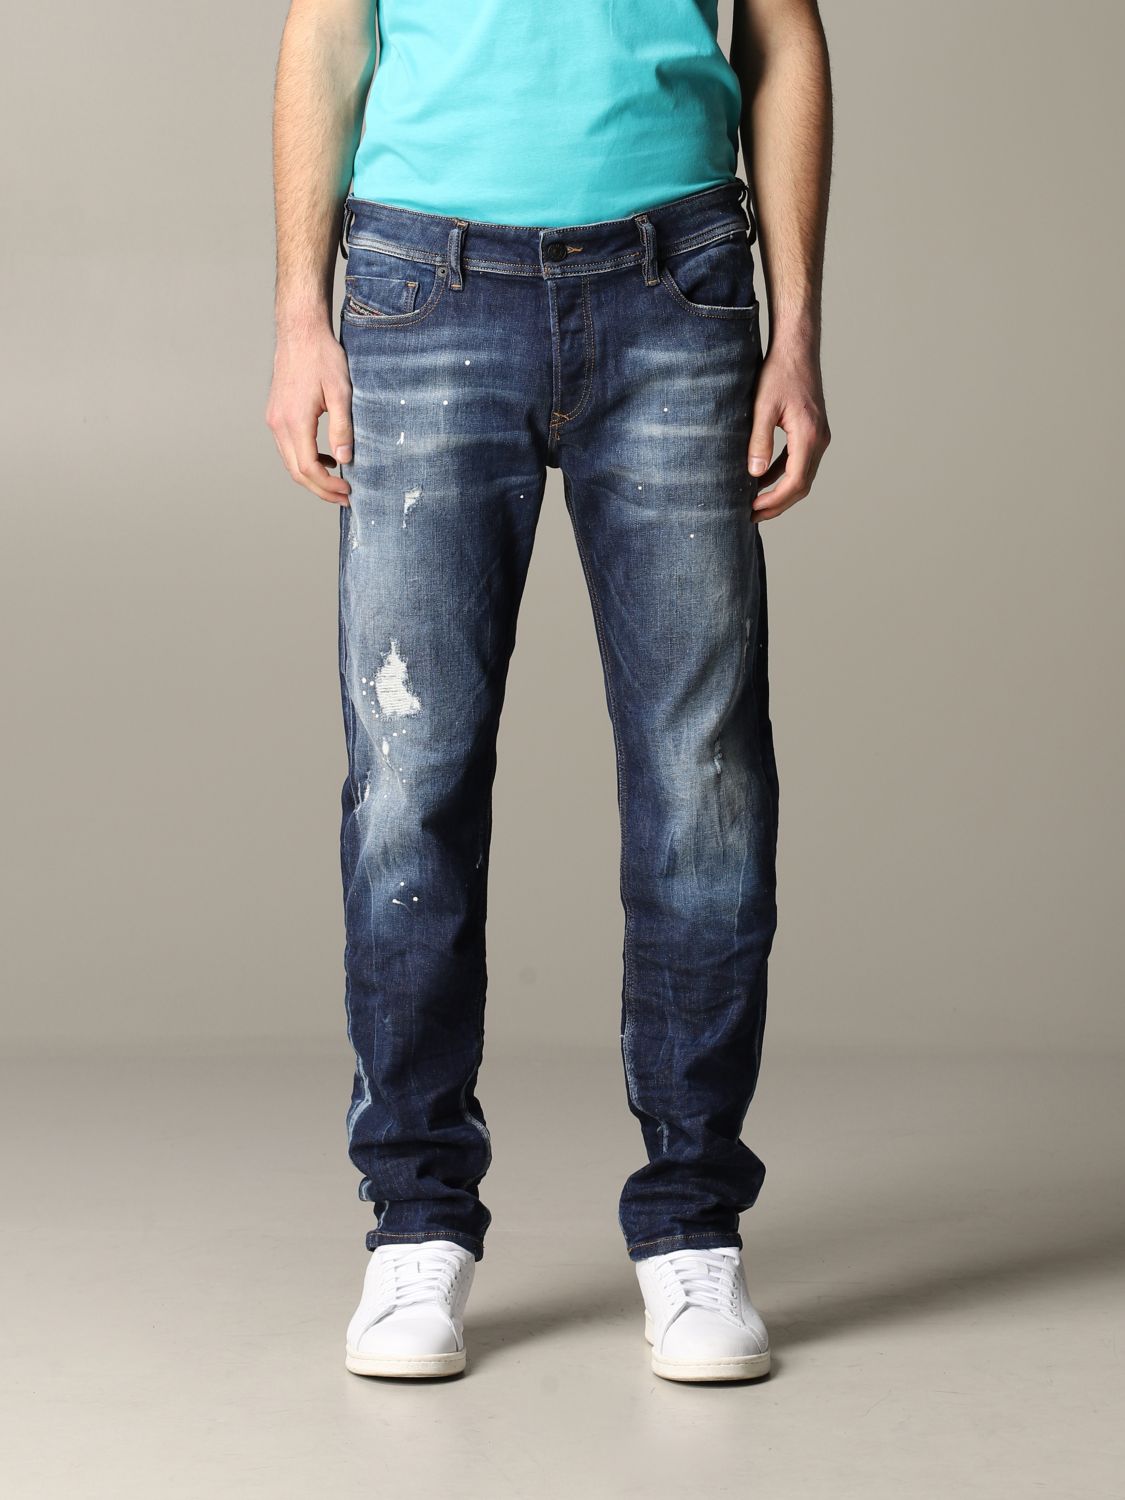 Outlet: jeans denim with tears Blue | Diesel jeans 00SWJE 0097L online on